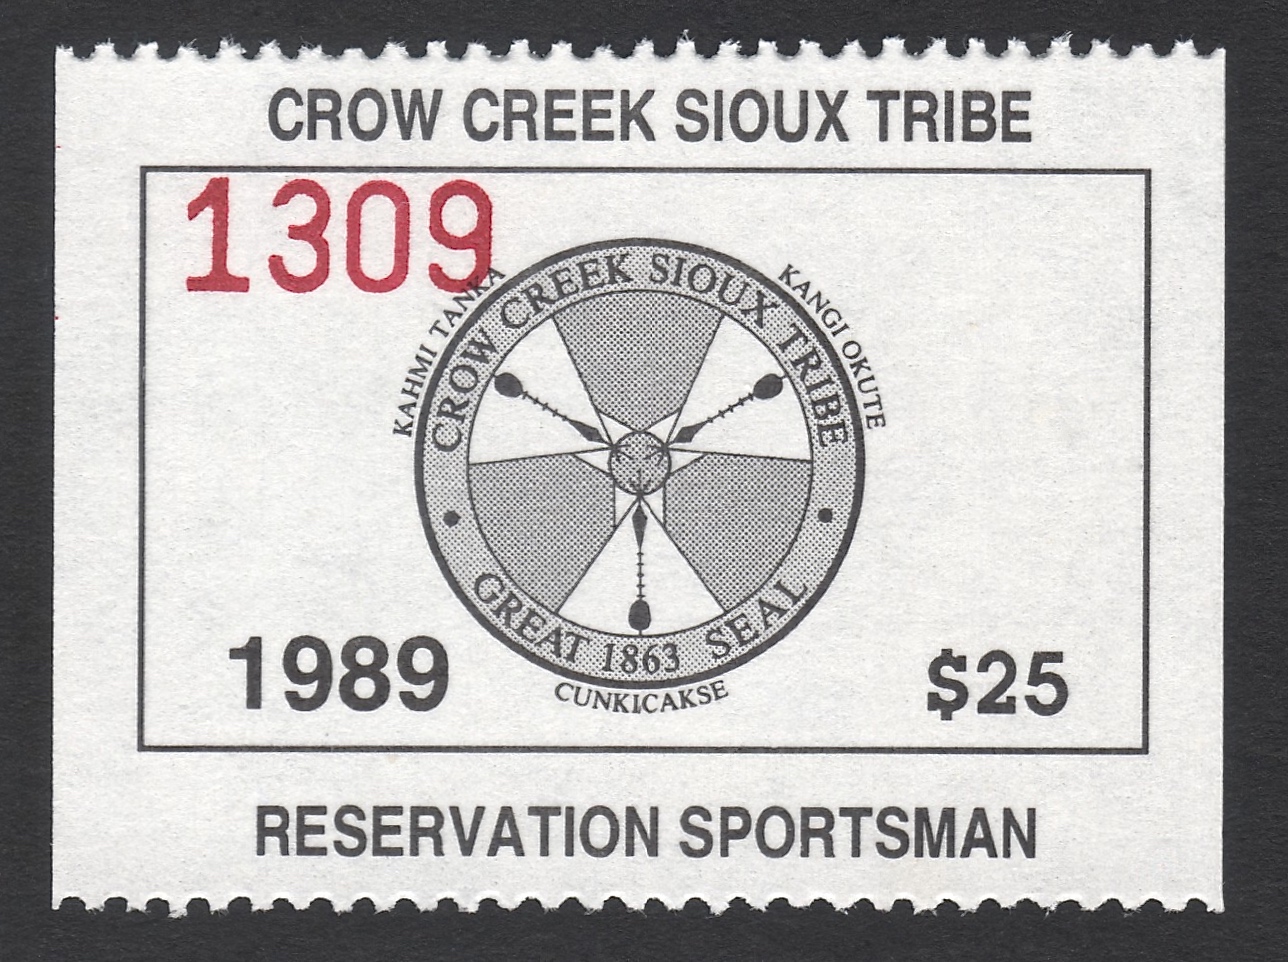 1989 Crow Creek Reservation Sportsman